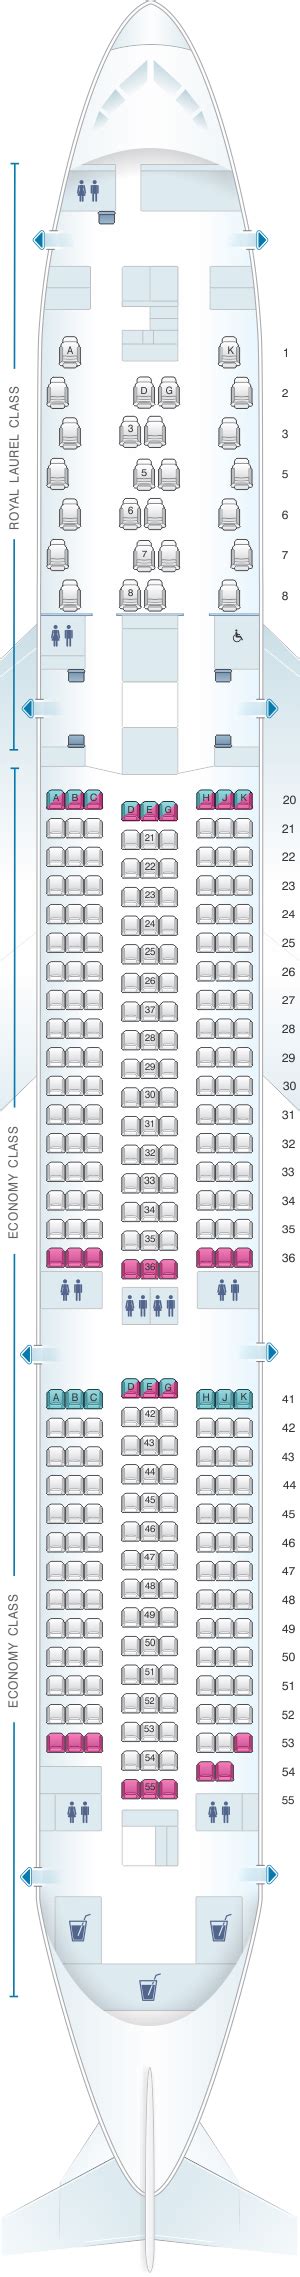 777 300er Seat Map Eva Air